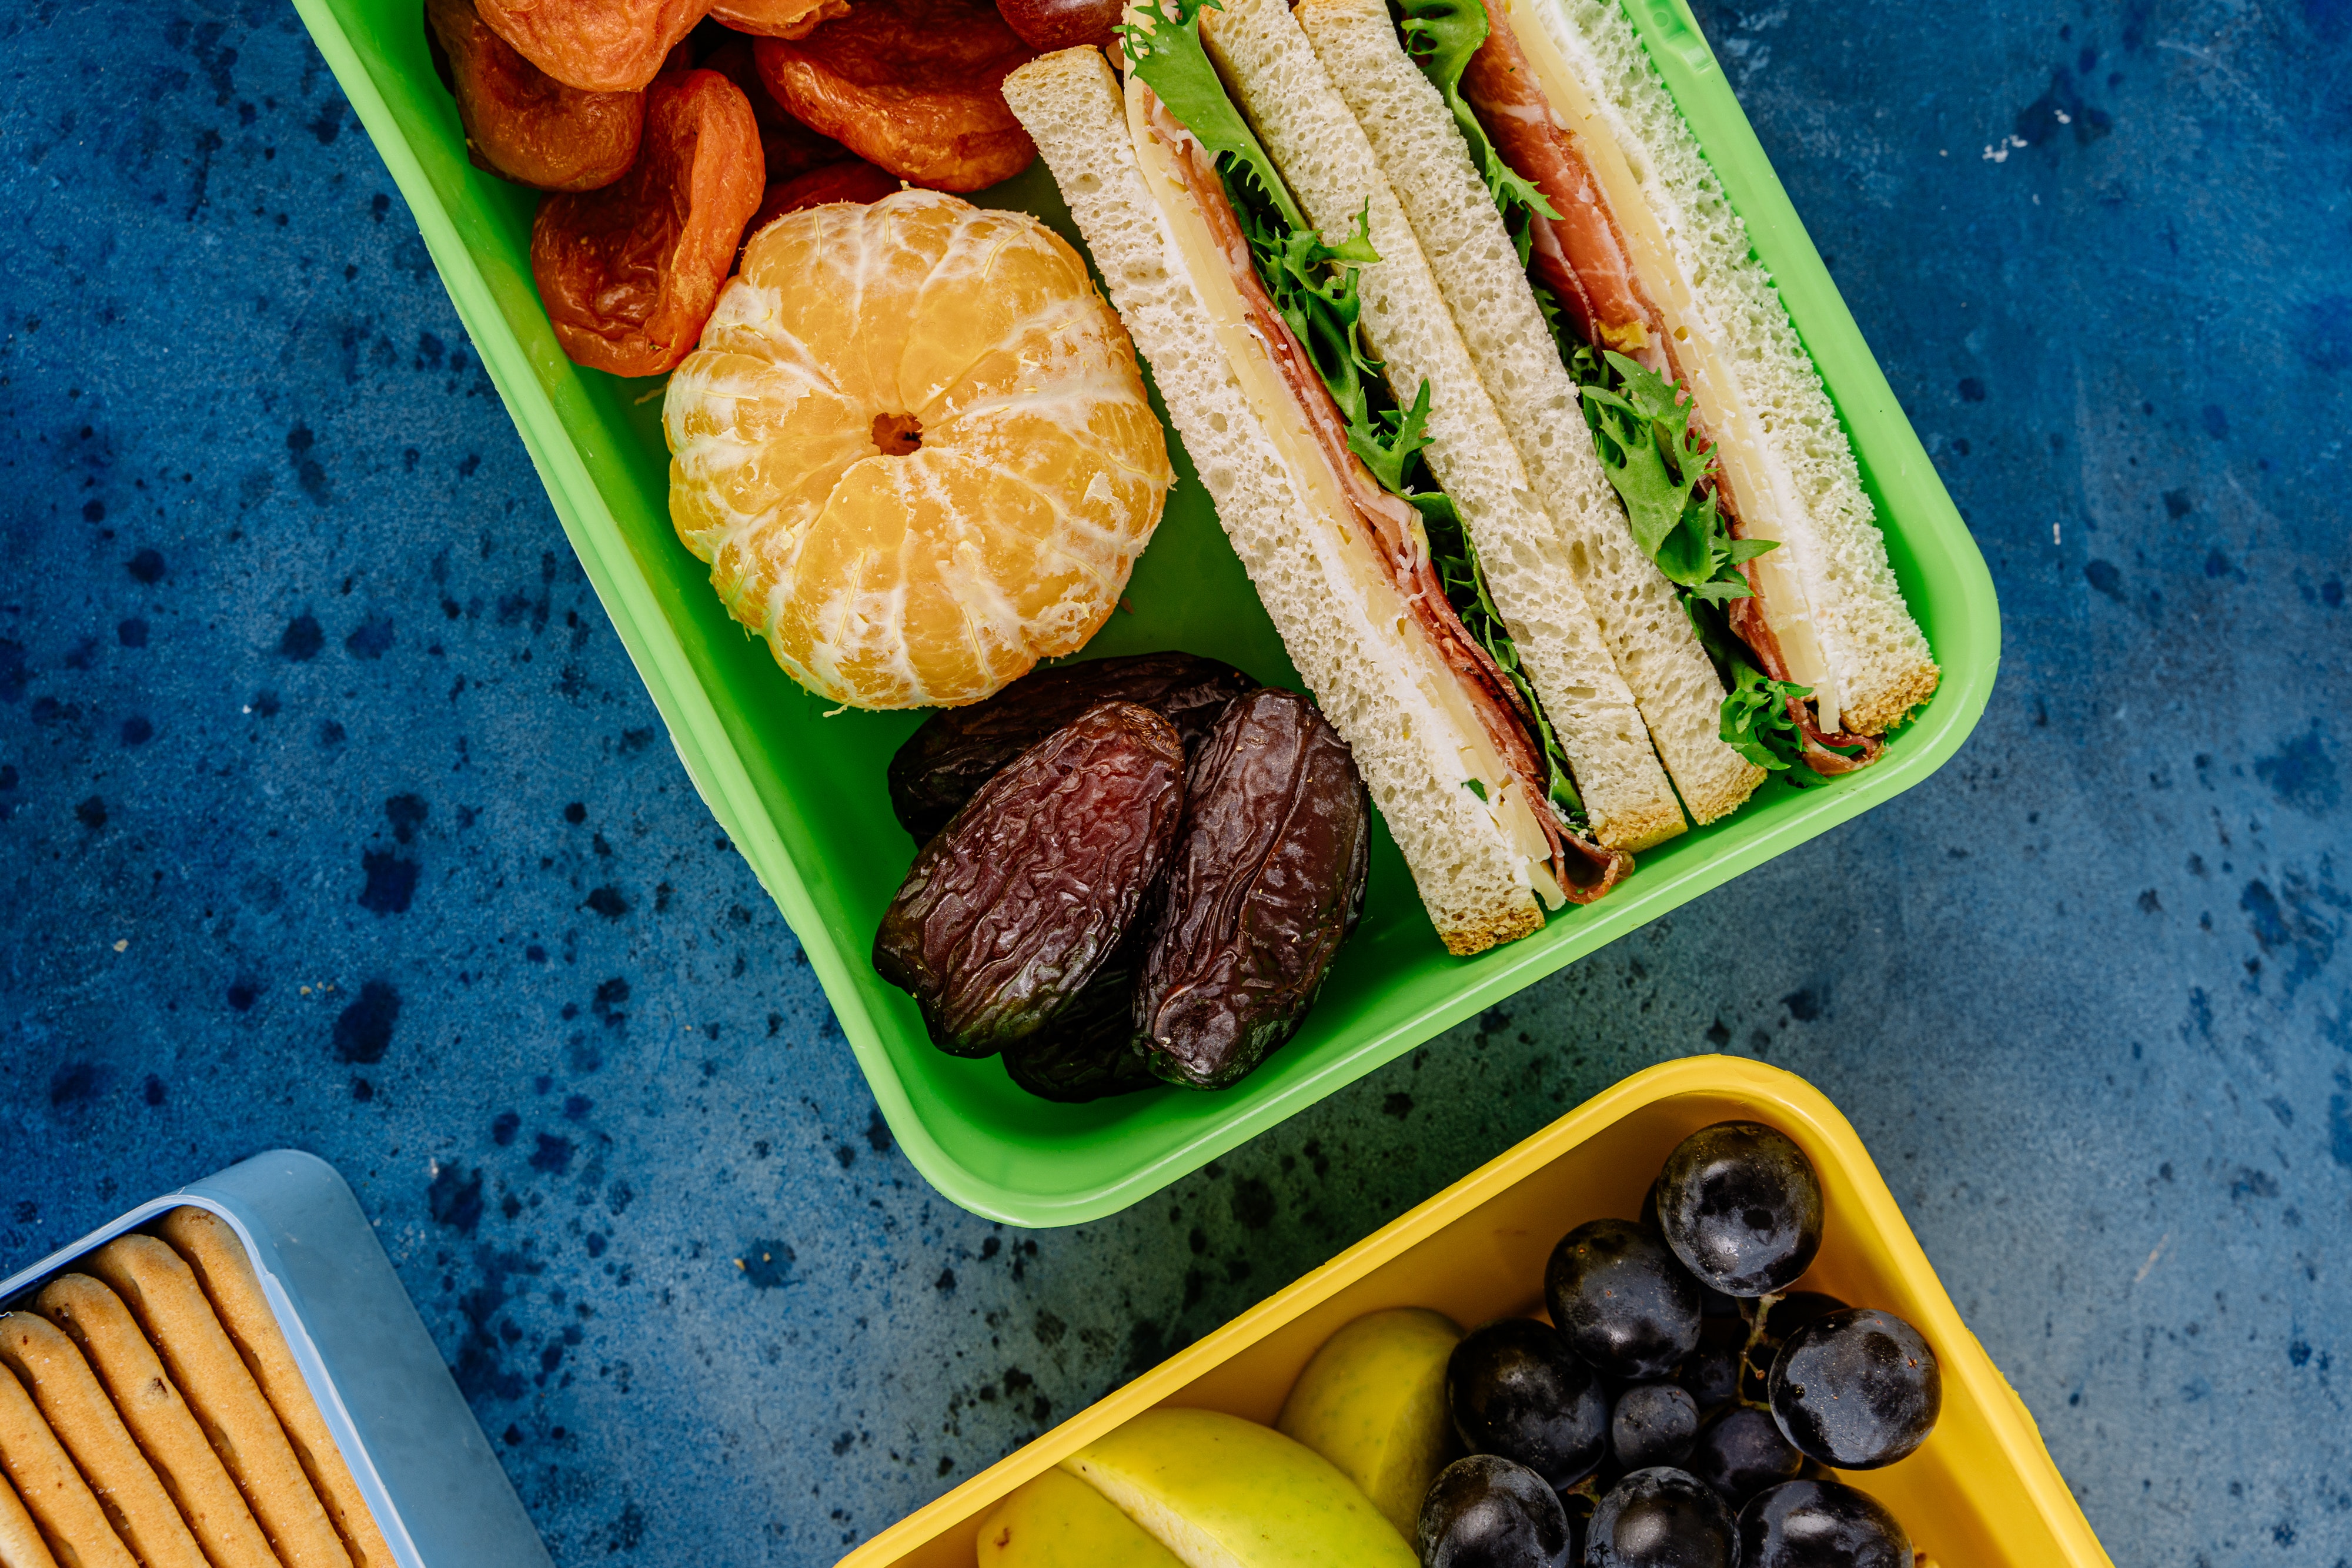 Bosham Primary School - Packed Lunches